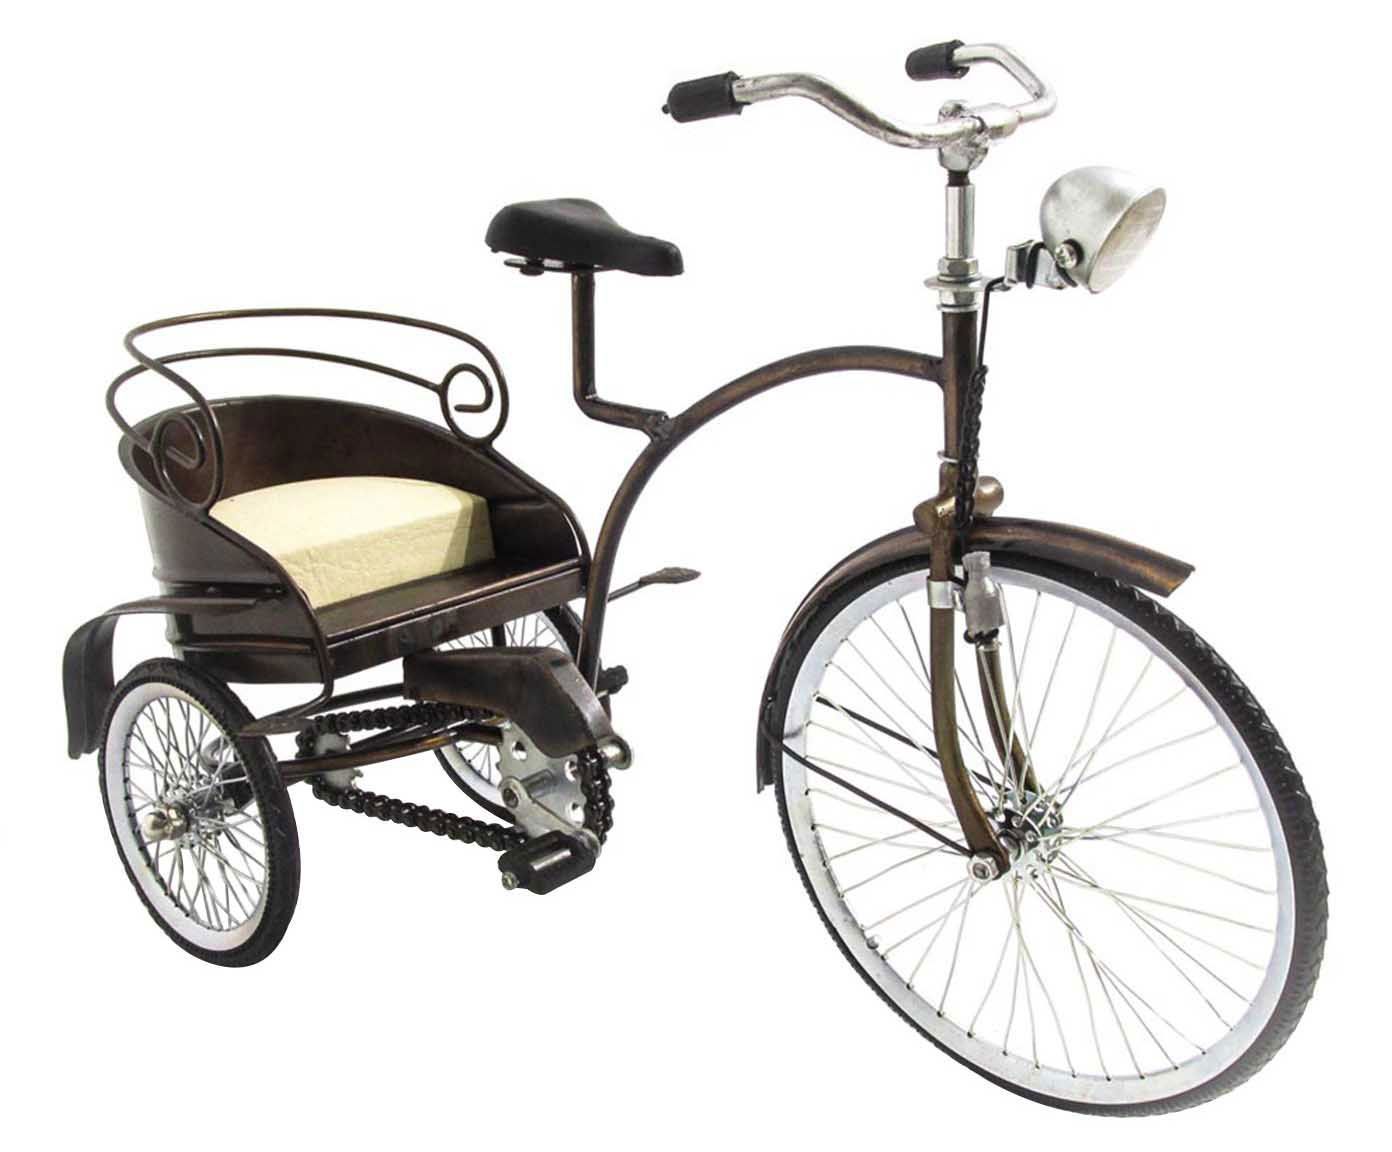 Miniatura triciclo vintage | Westwing.com.br